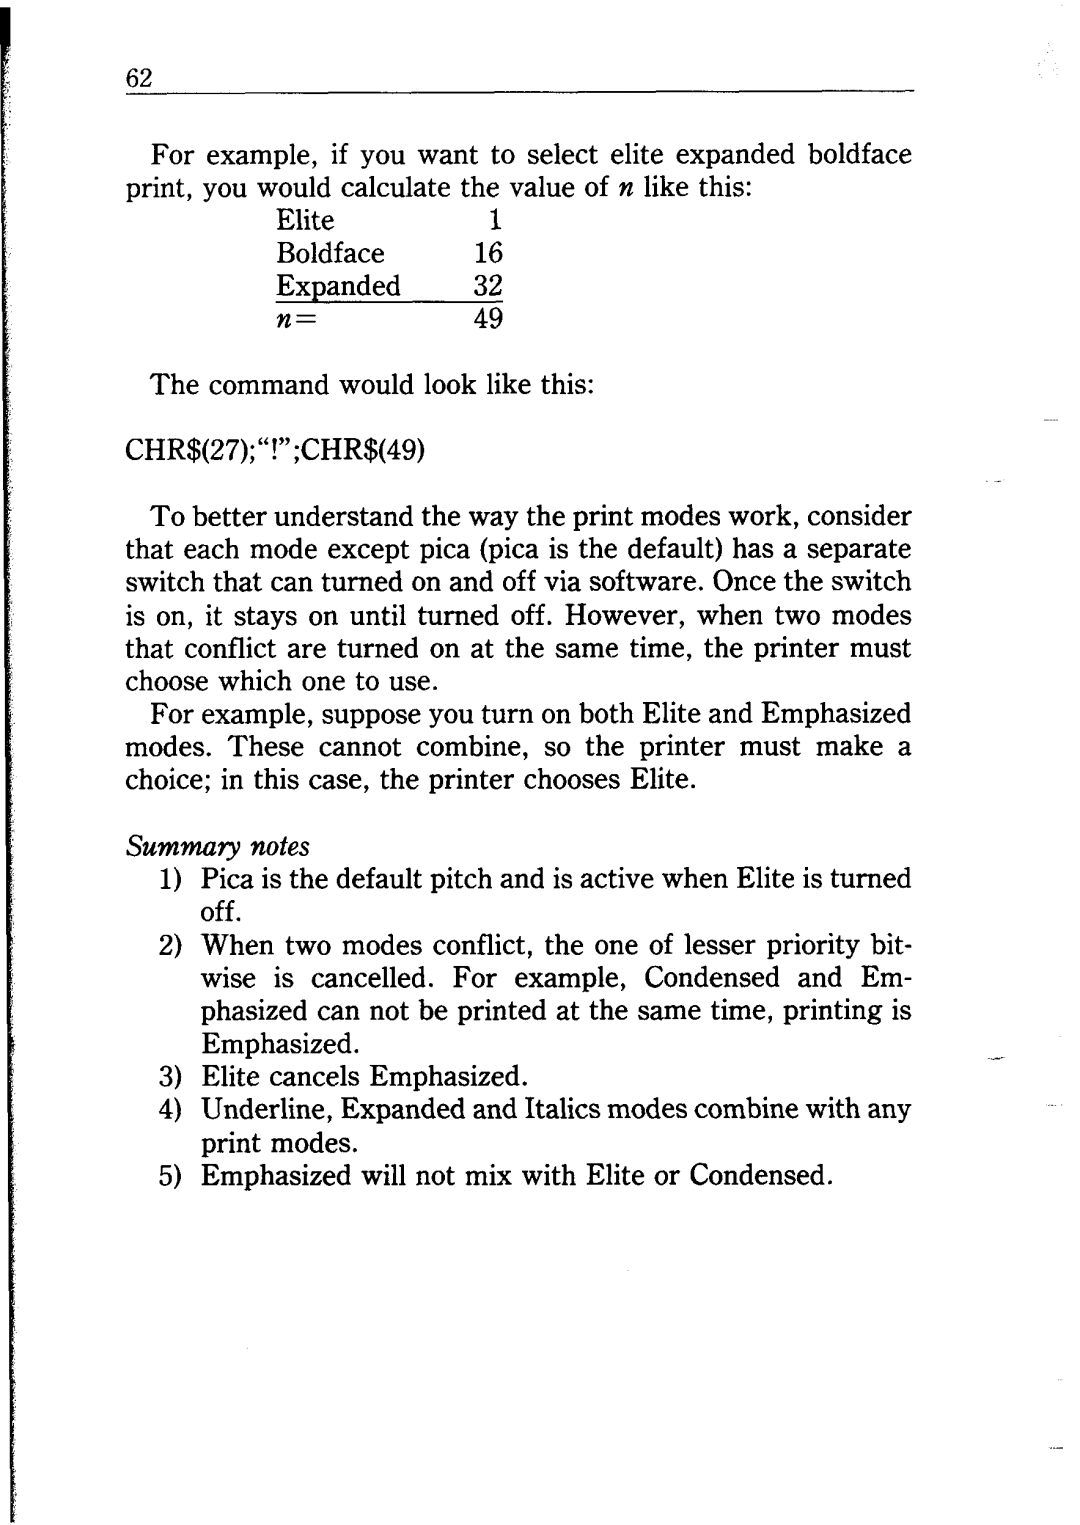 Star Micronics NB24-10/15 user manual Summary notes 